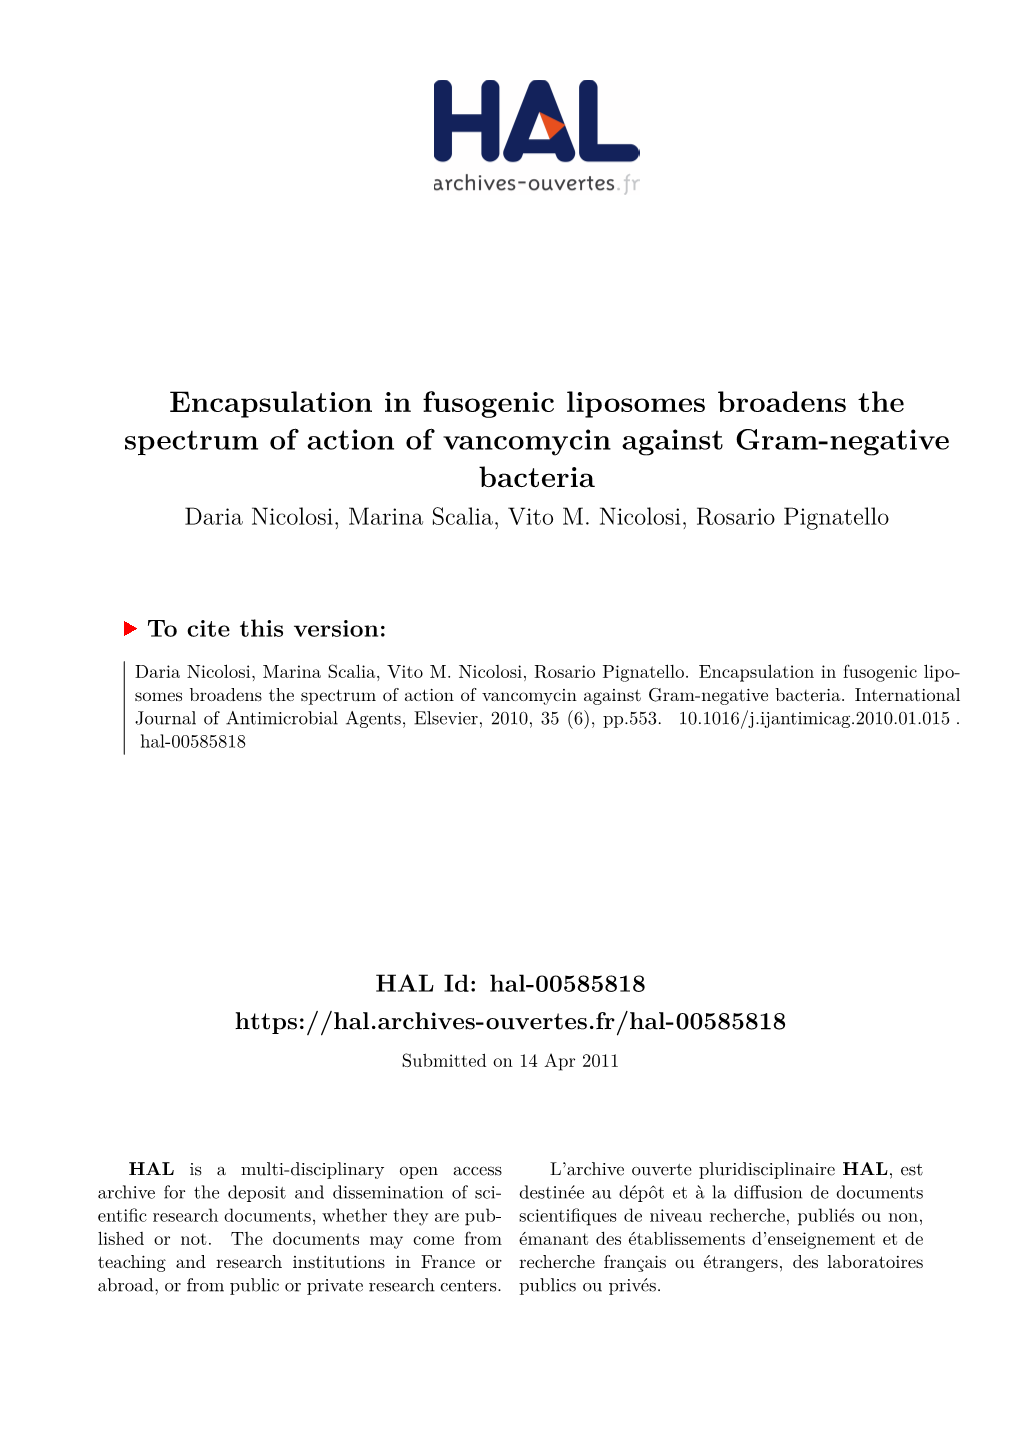 Encapsulation in Fusogenic Liposomes Broadens the Spectrum of Action of Vancomycin Against Gram-Negative Bacteria Daria Nicolosi, Marina Scalia, Vito M